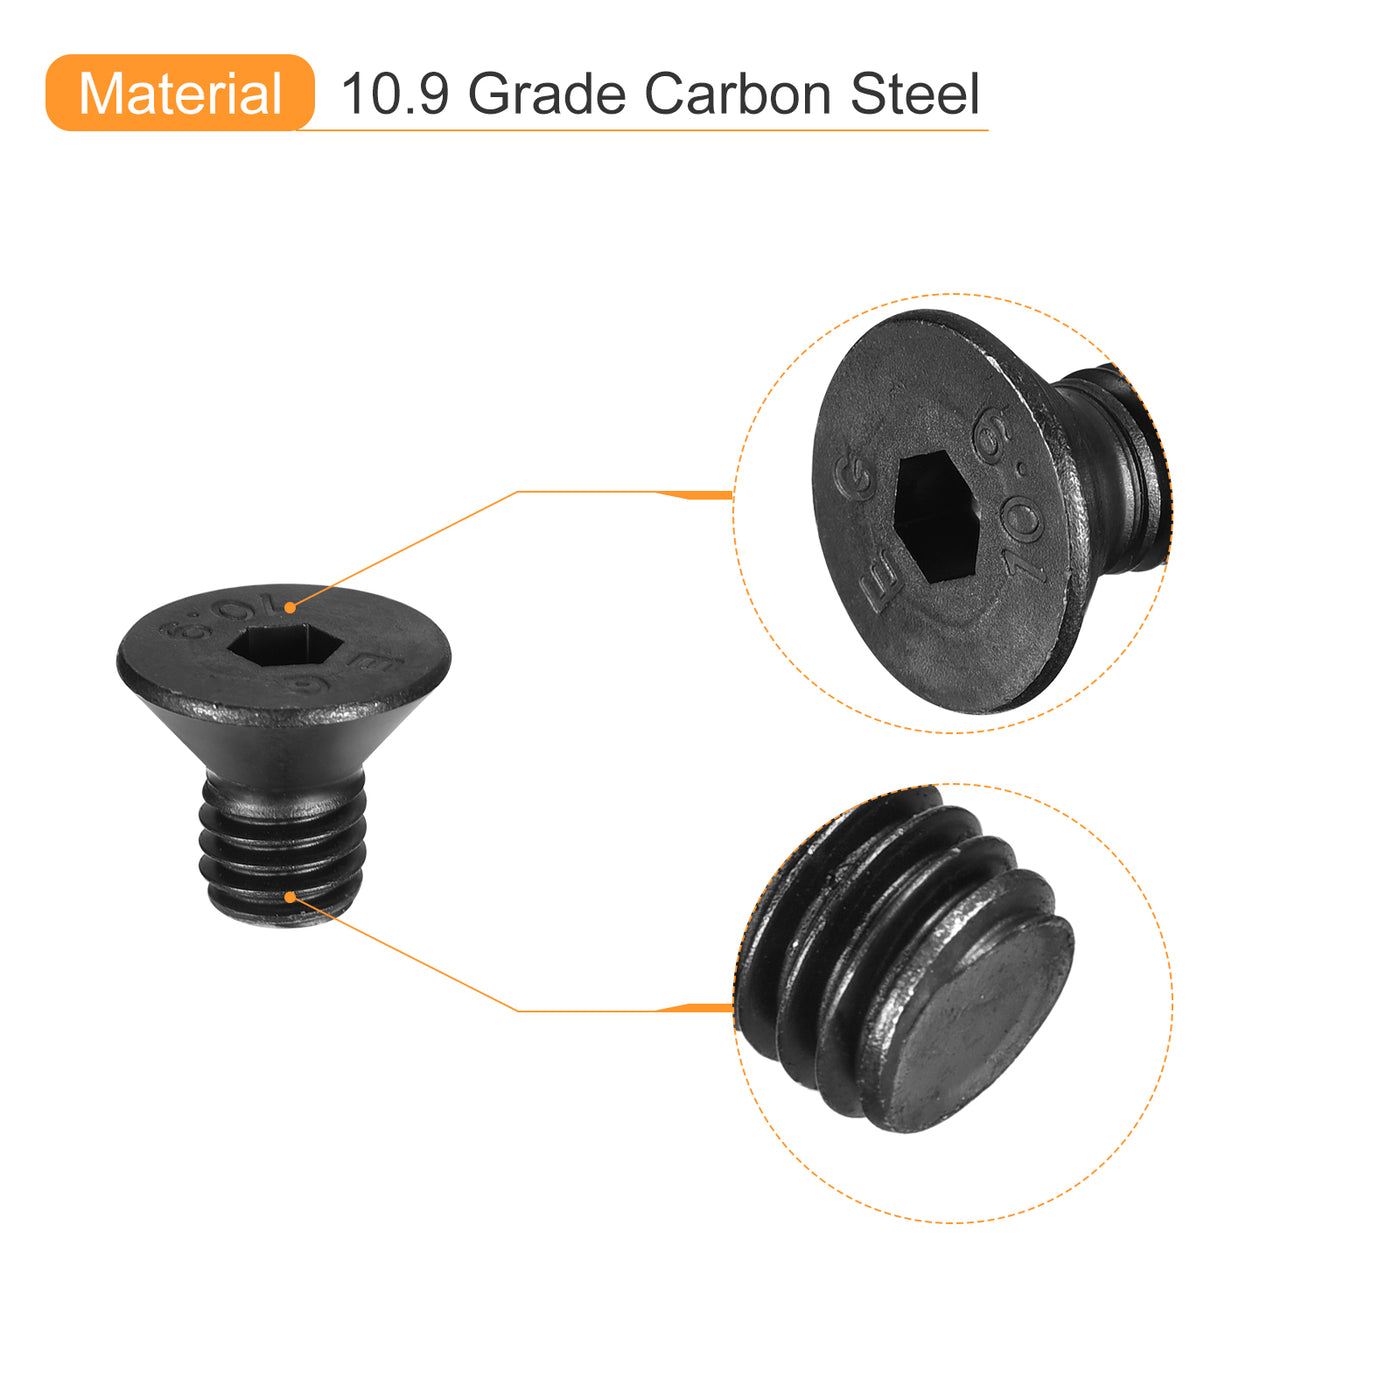 uxcell Uxcell 3/8-16x5/8" Flat Head Socket Cap Screws, 10.9 Grade Carbon Steel, 20PCS